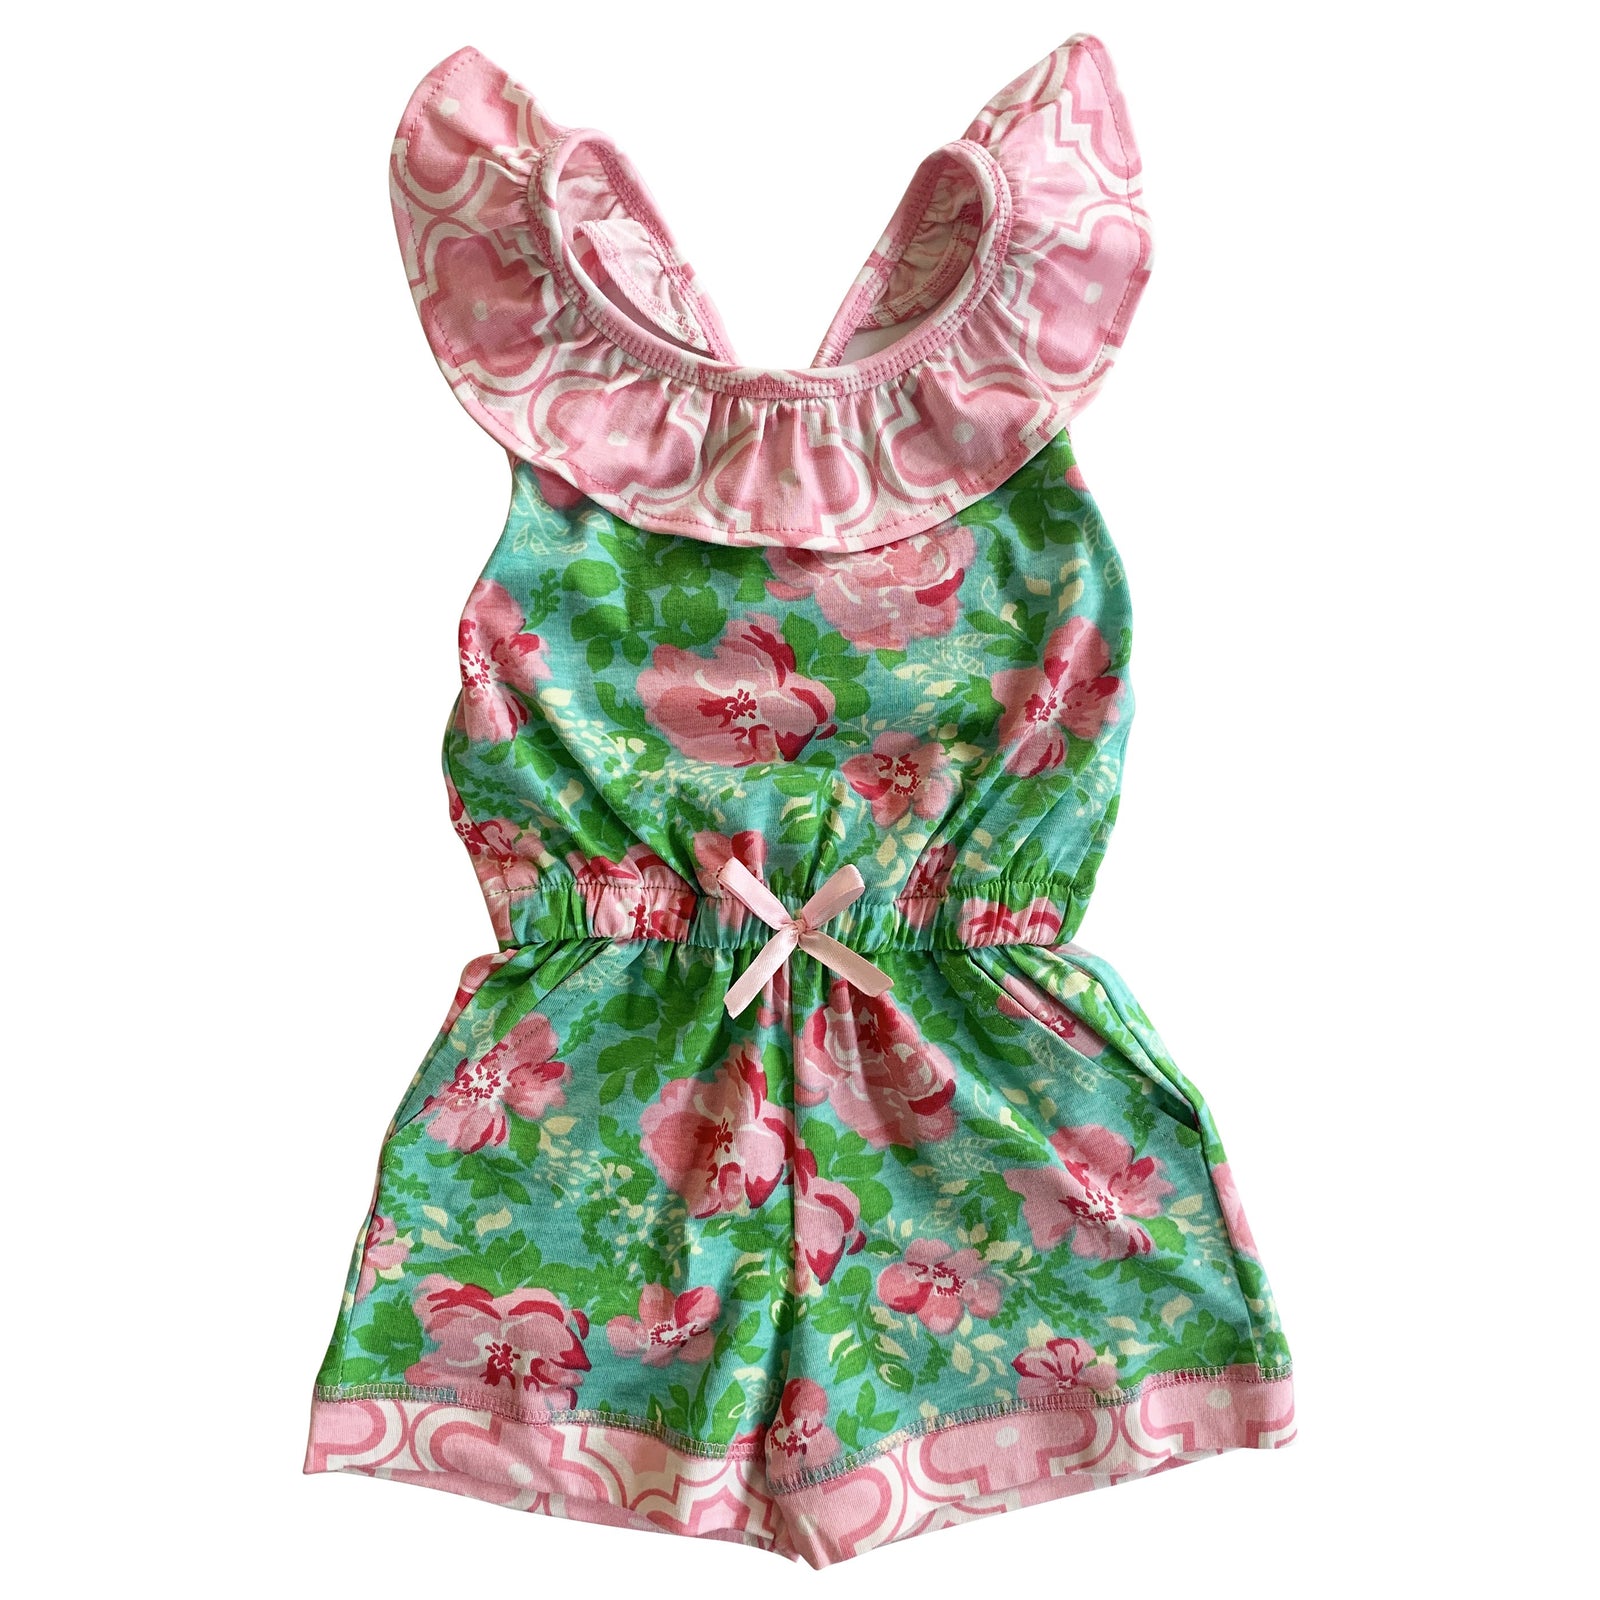 Jumpsuit Shabby Chic Floral Spring Summer Little Big Girls Romper Sizes 2/3T - 11/12 by AnnLoren